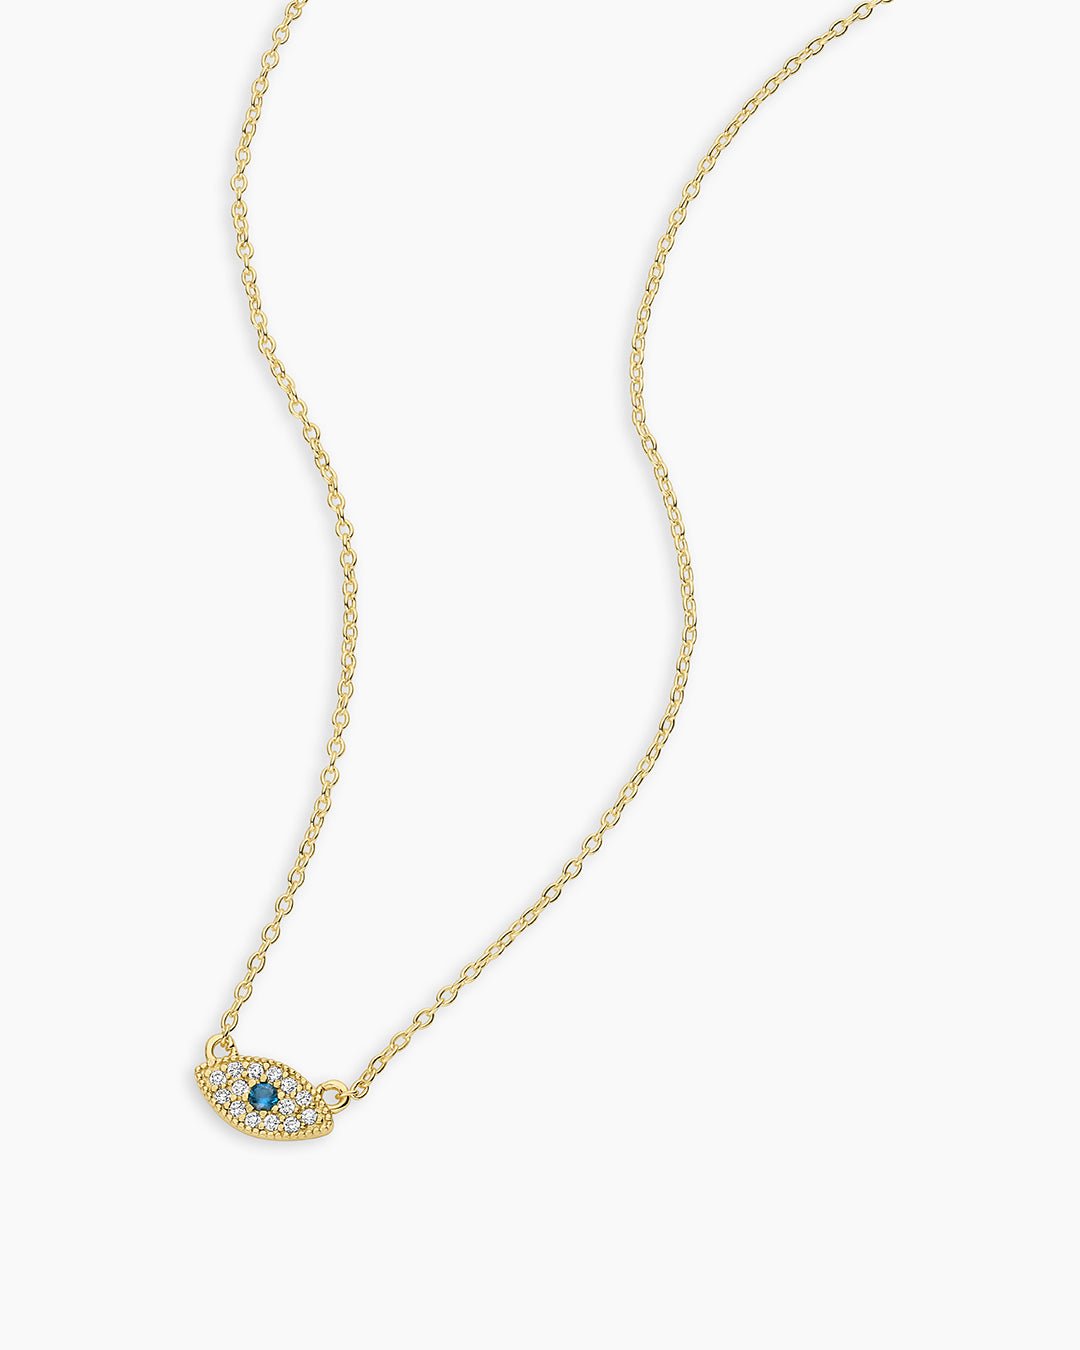 White CZ / London Blue Nanogem Evil Eye Charm Necklace necklace for protection || option:: Gold Plated